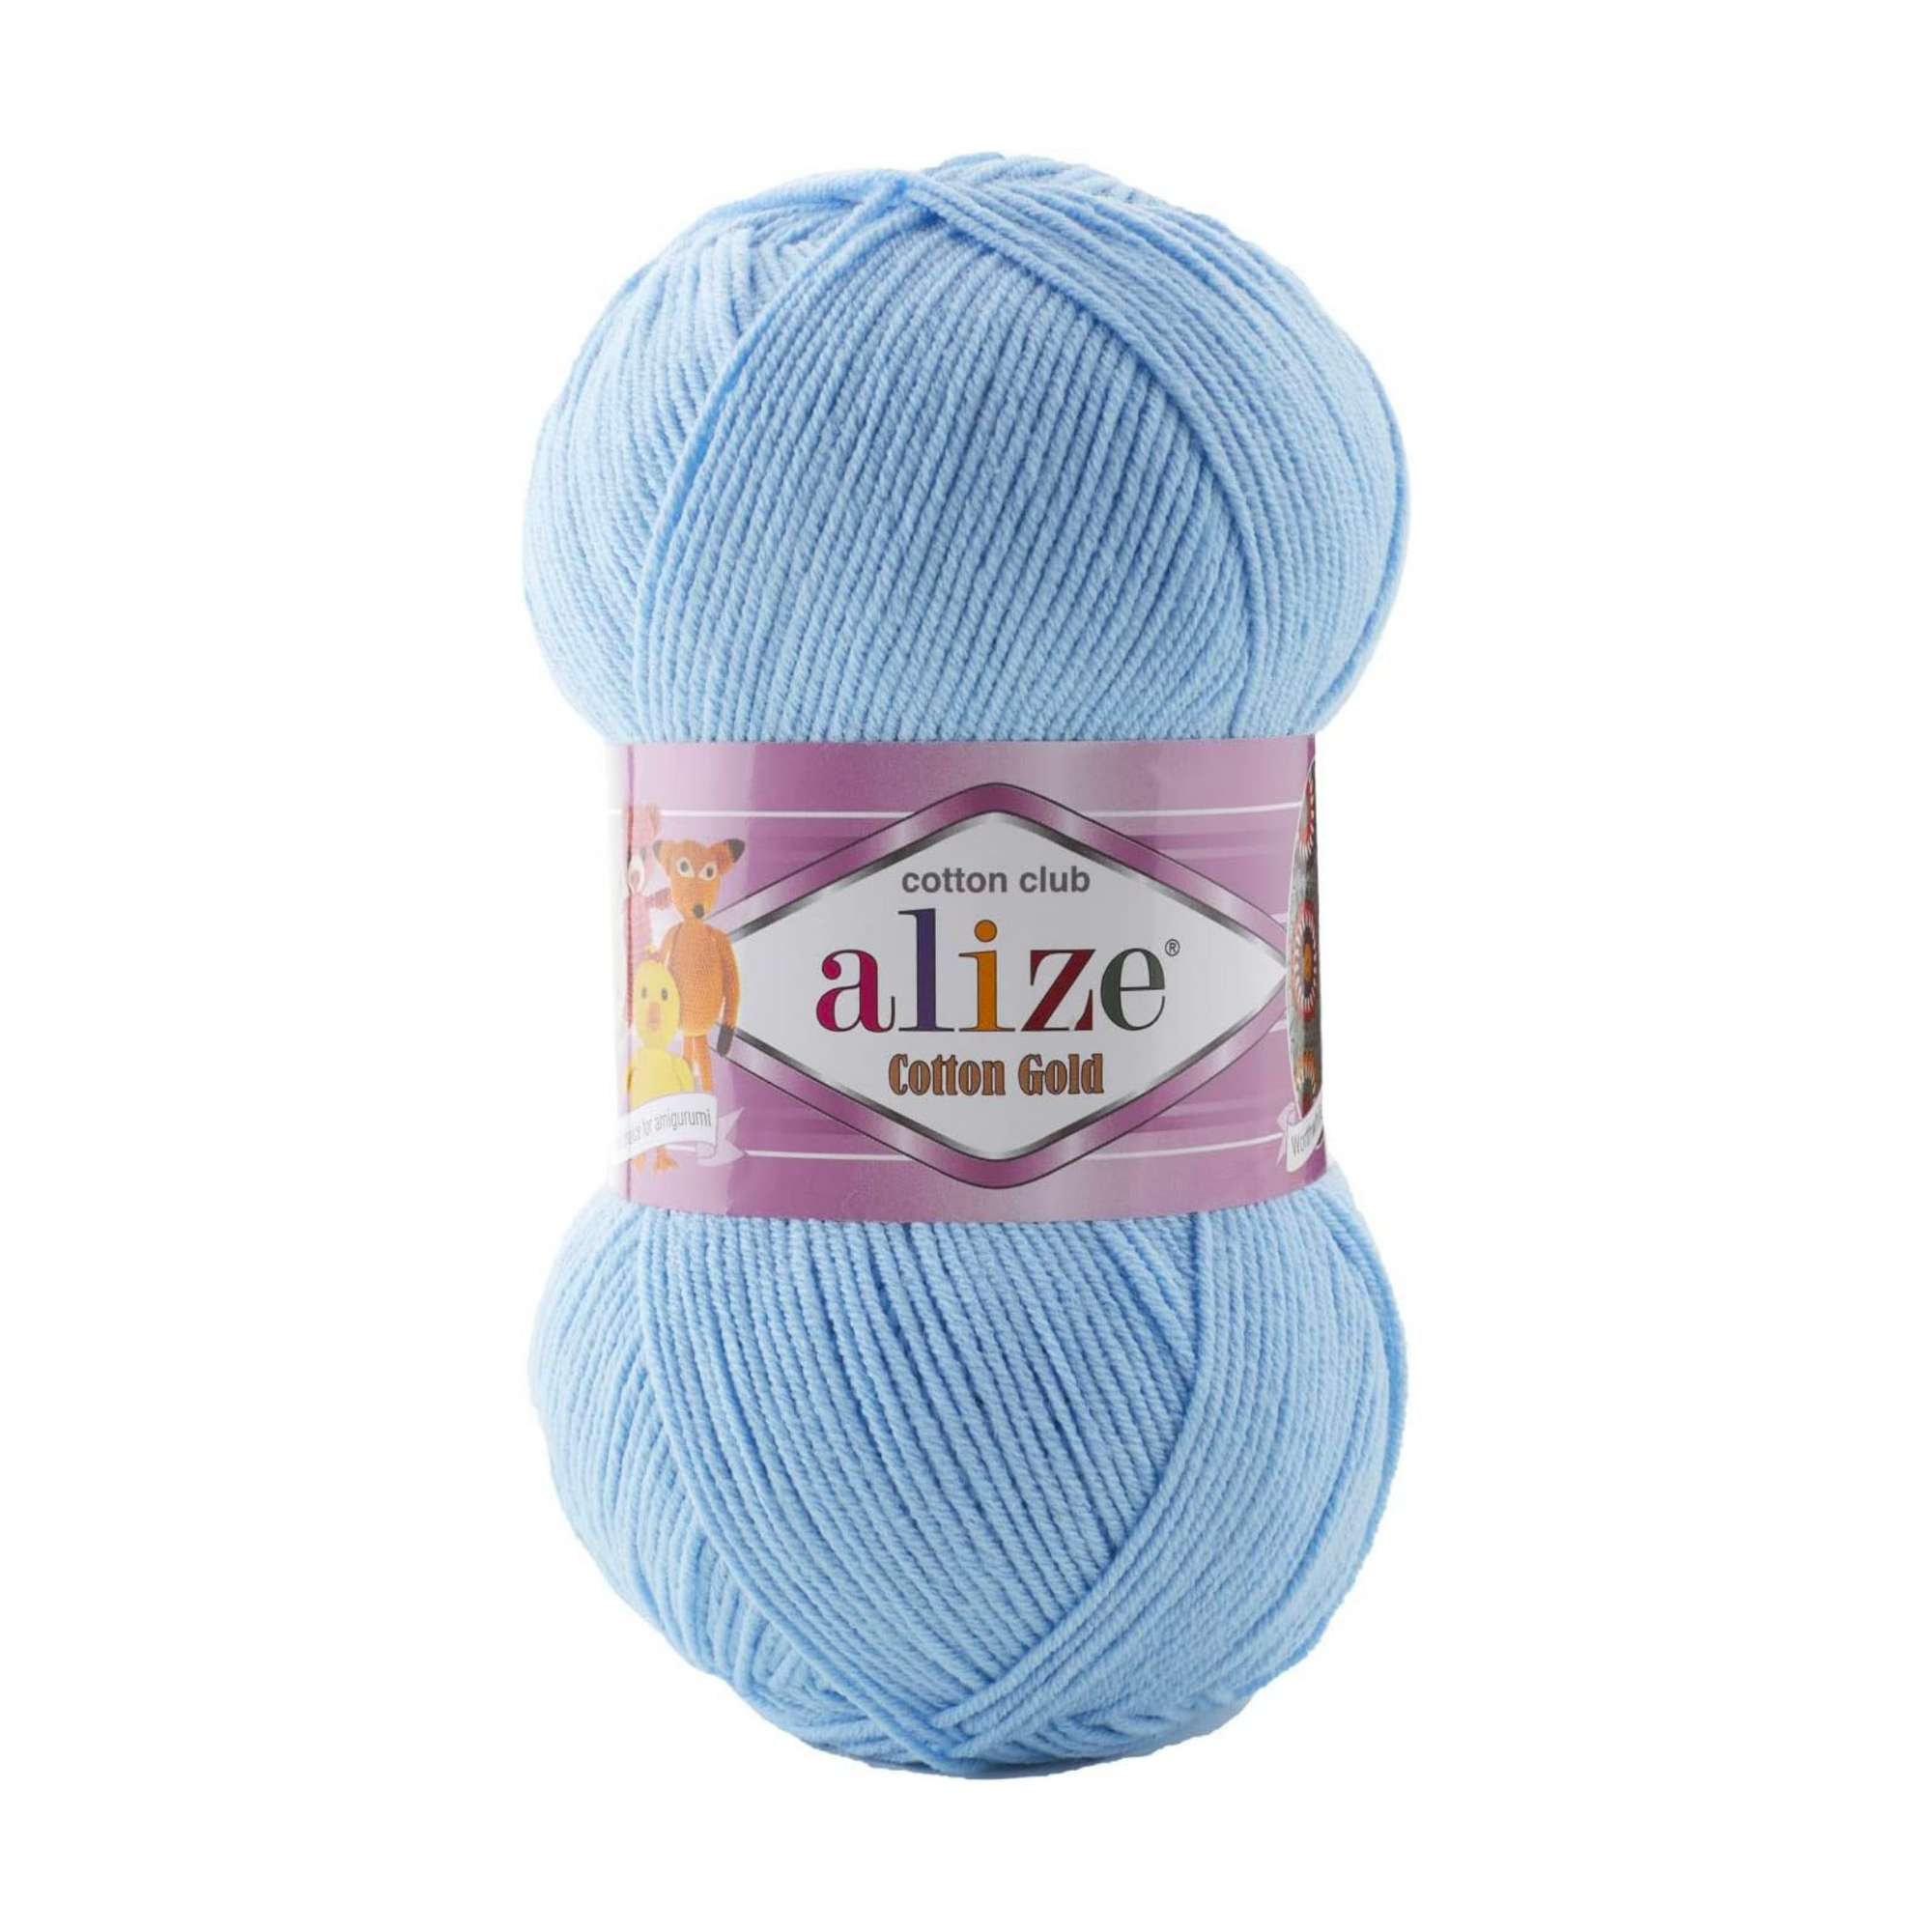 Alize Cotton Gold Knitting Yarn, Caramel - 499